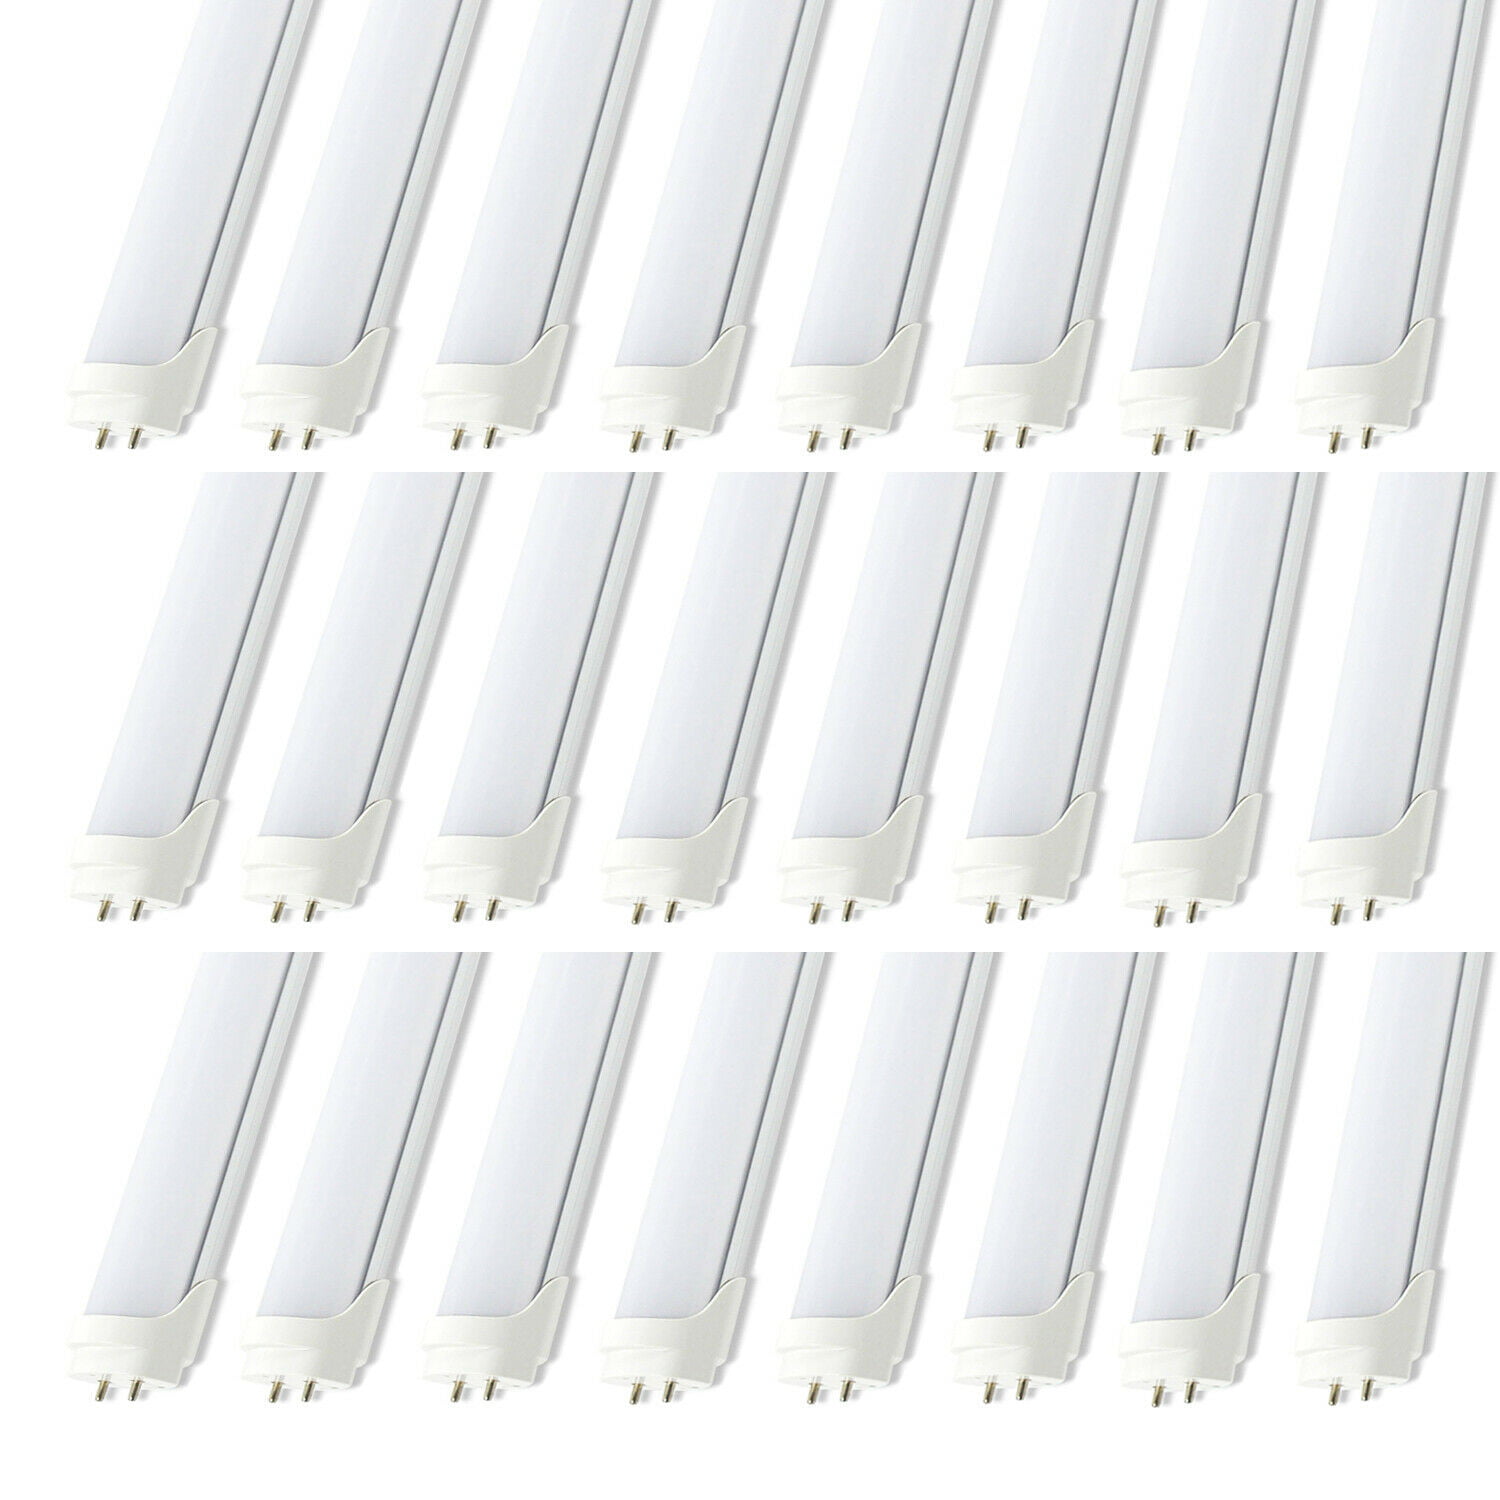 Details about   T8 4FT LED Tube Light Bulbs 28W G13 Bin-Pin 6000K Lighting Bulbs 25-100 Pieces # 